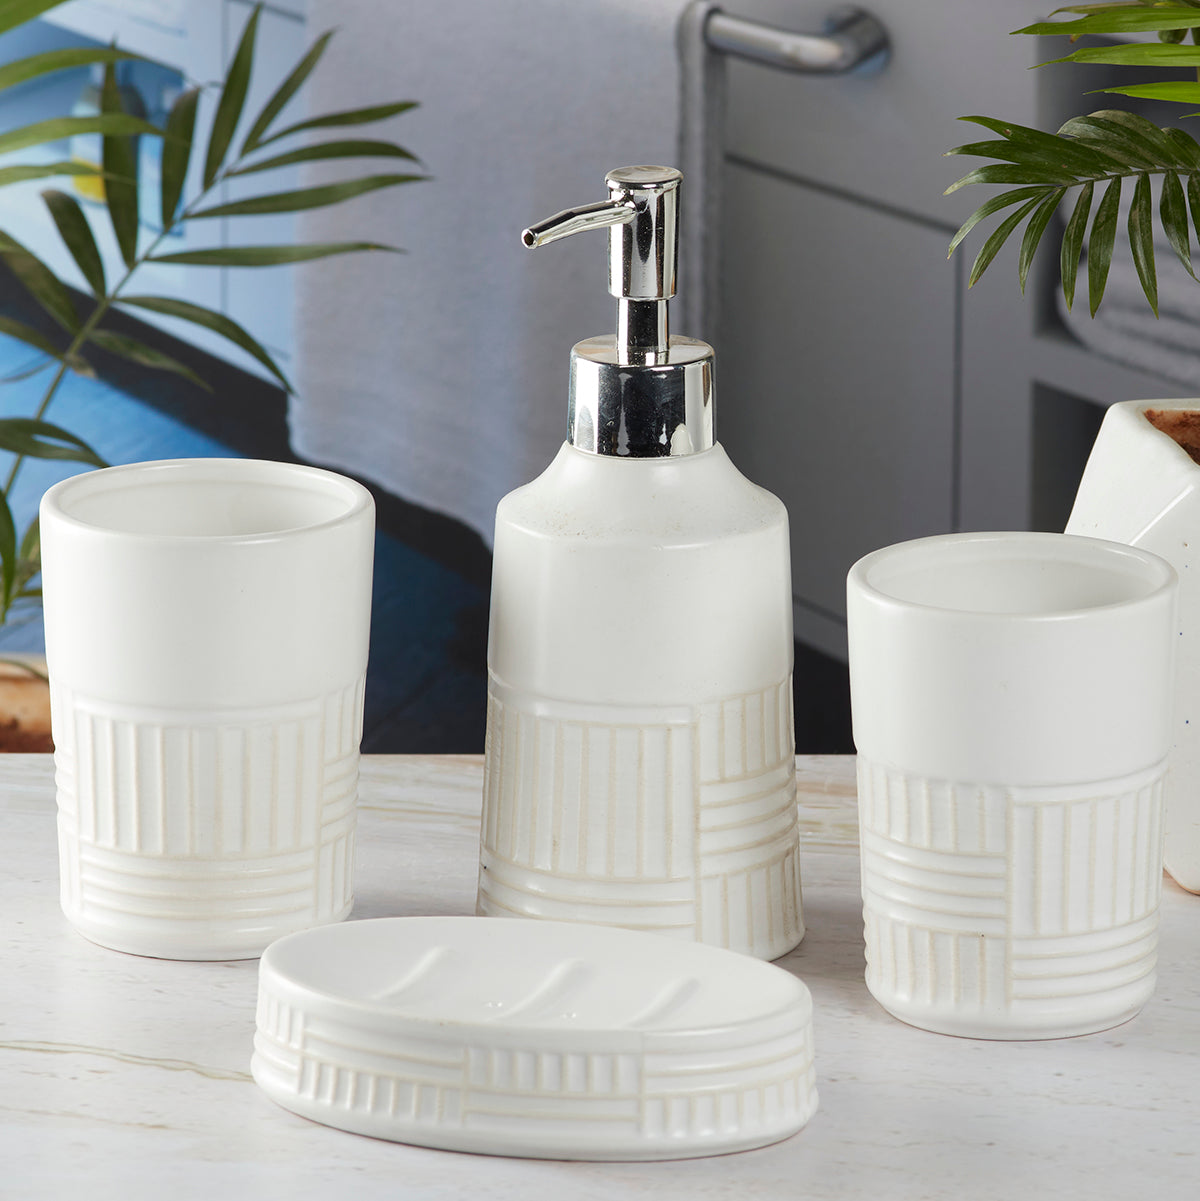 Ceramic Bathroom Accessories Set of 4 Bath Set with Soap Dispenser (8142)